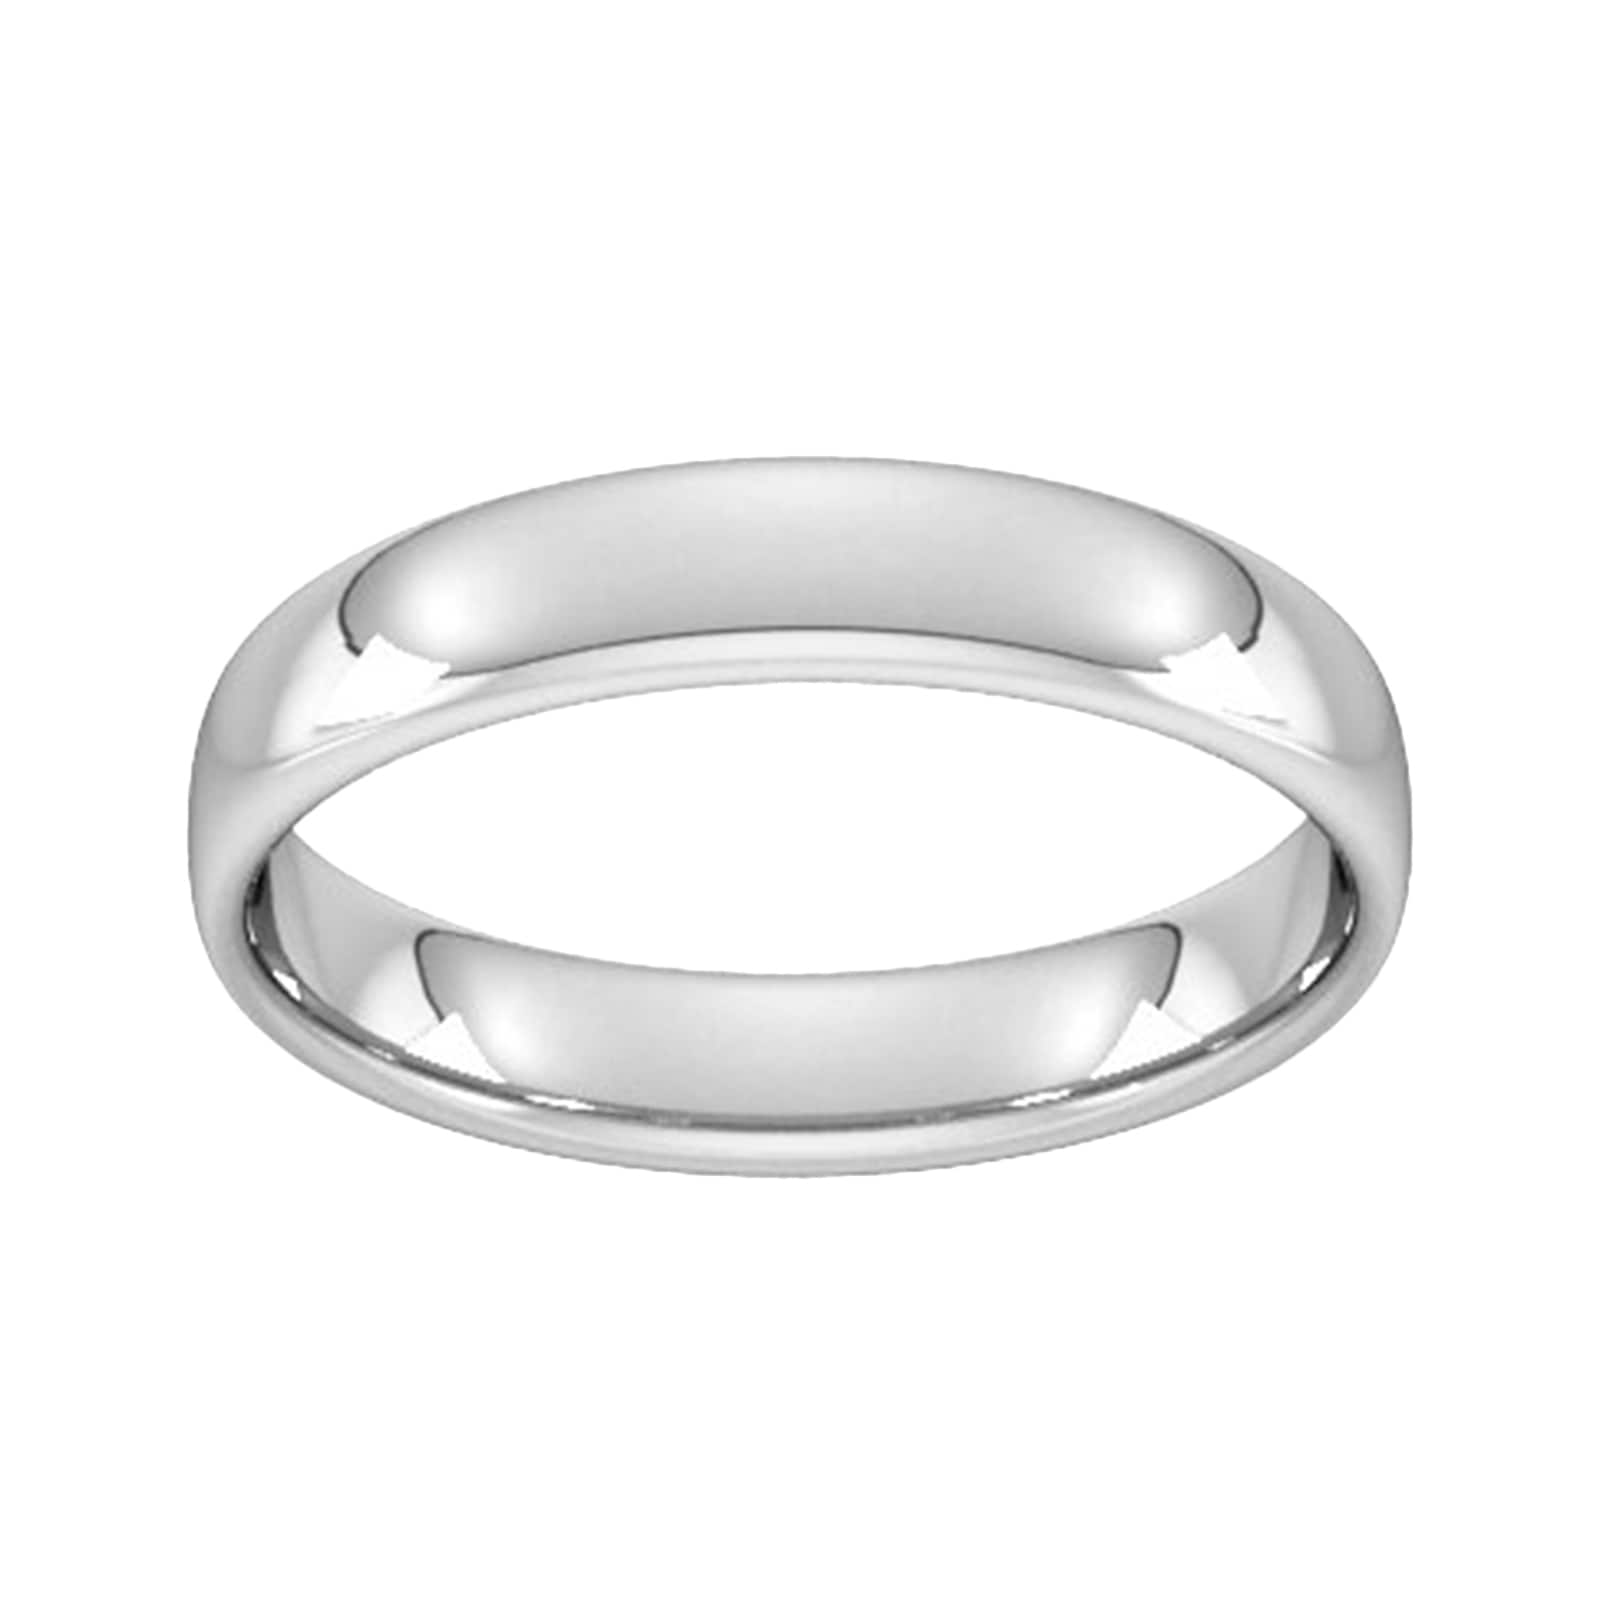 4mm Slight Court Standard Wedding Ring In 9 Carat White Gold - Ring Size S